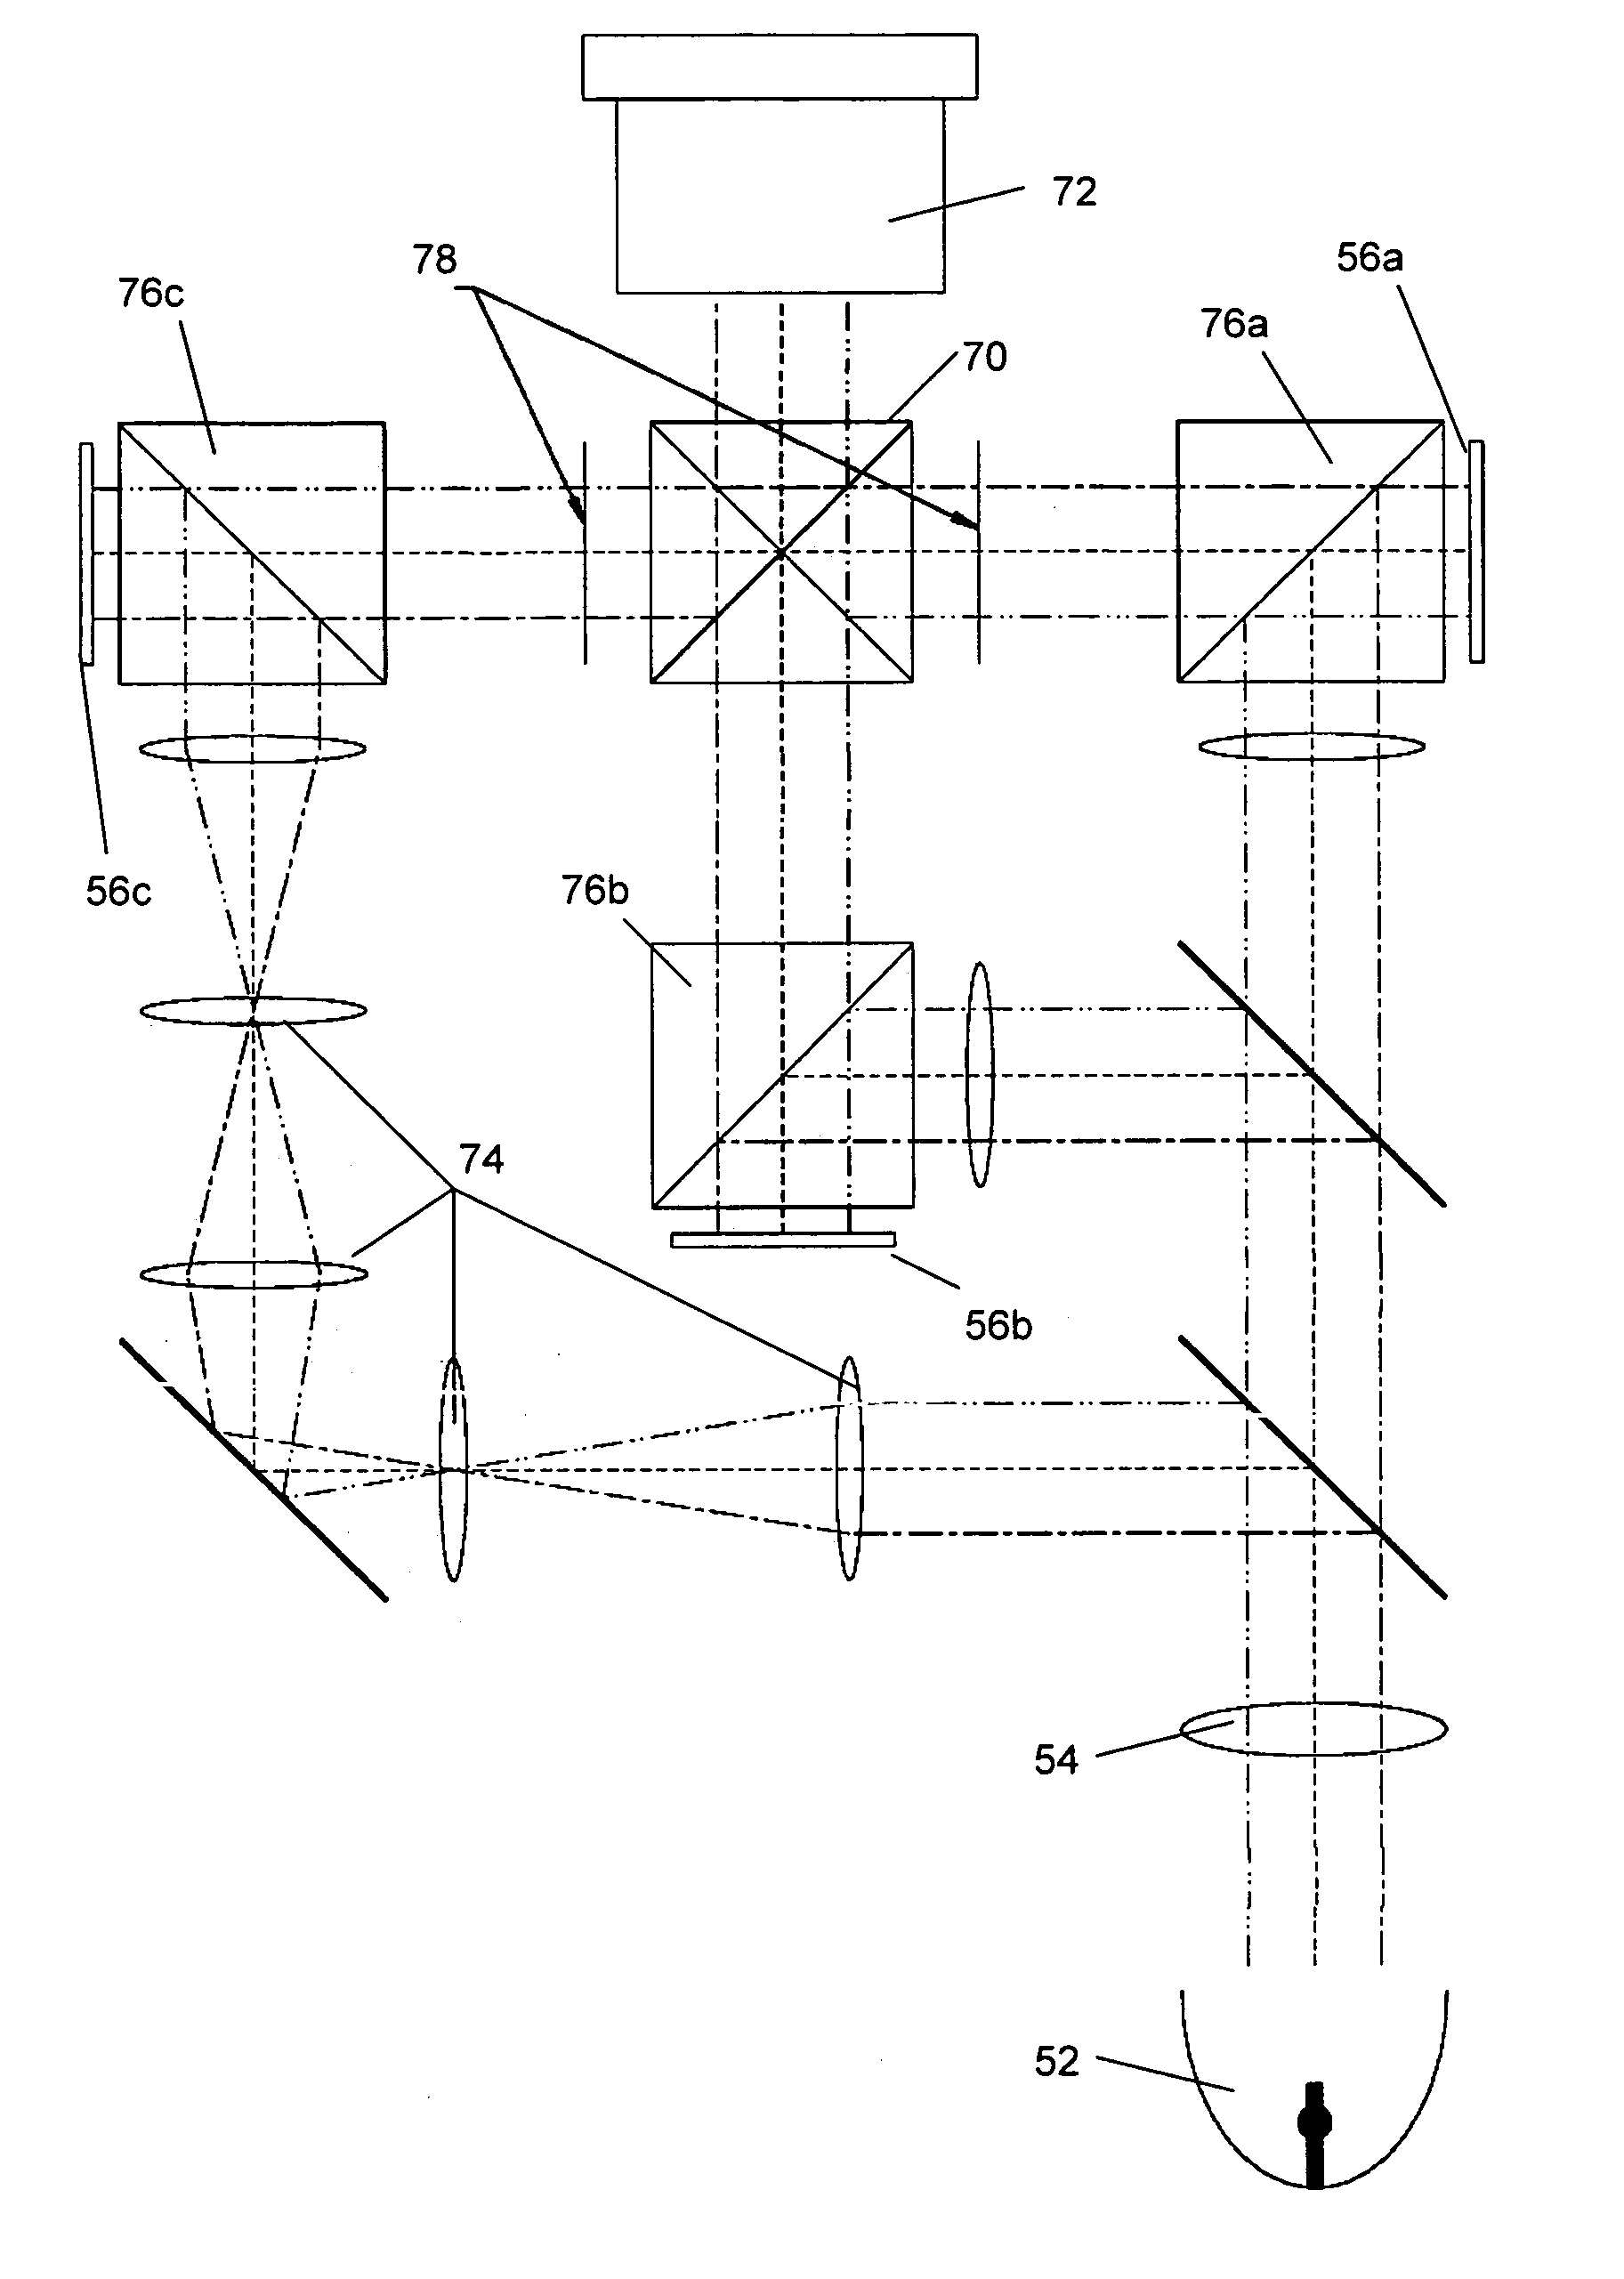 Optical arrangement for non-inverting illumination system